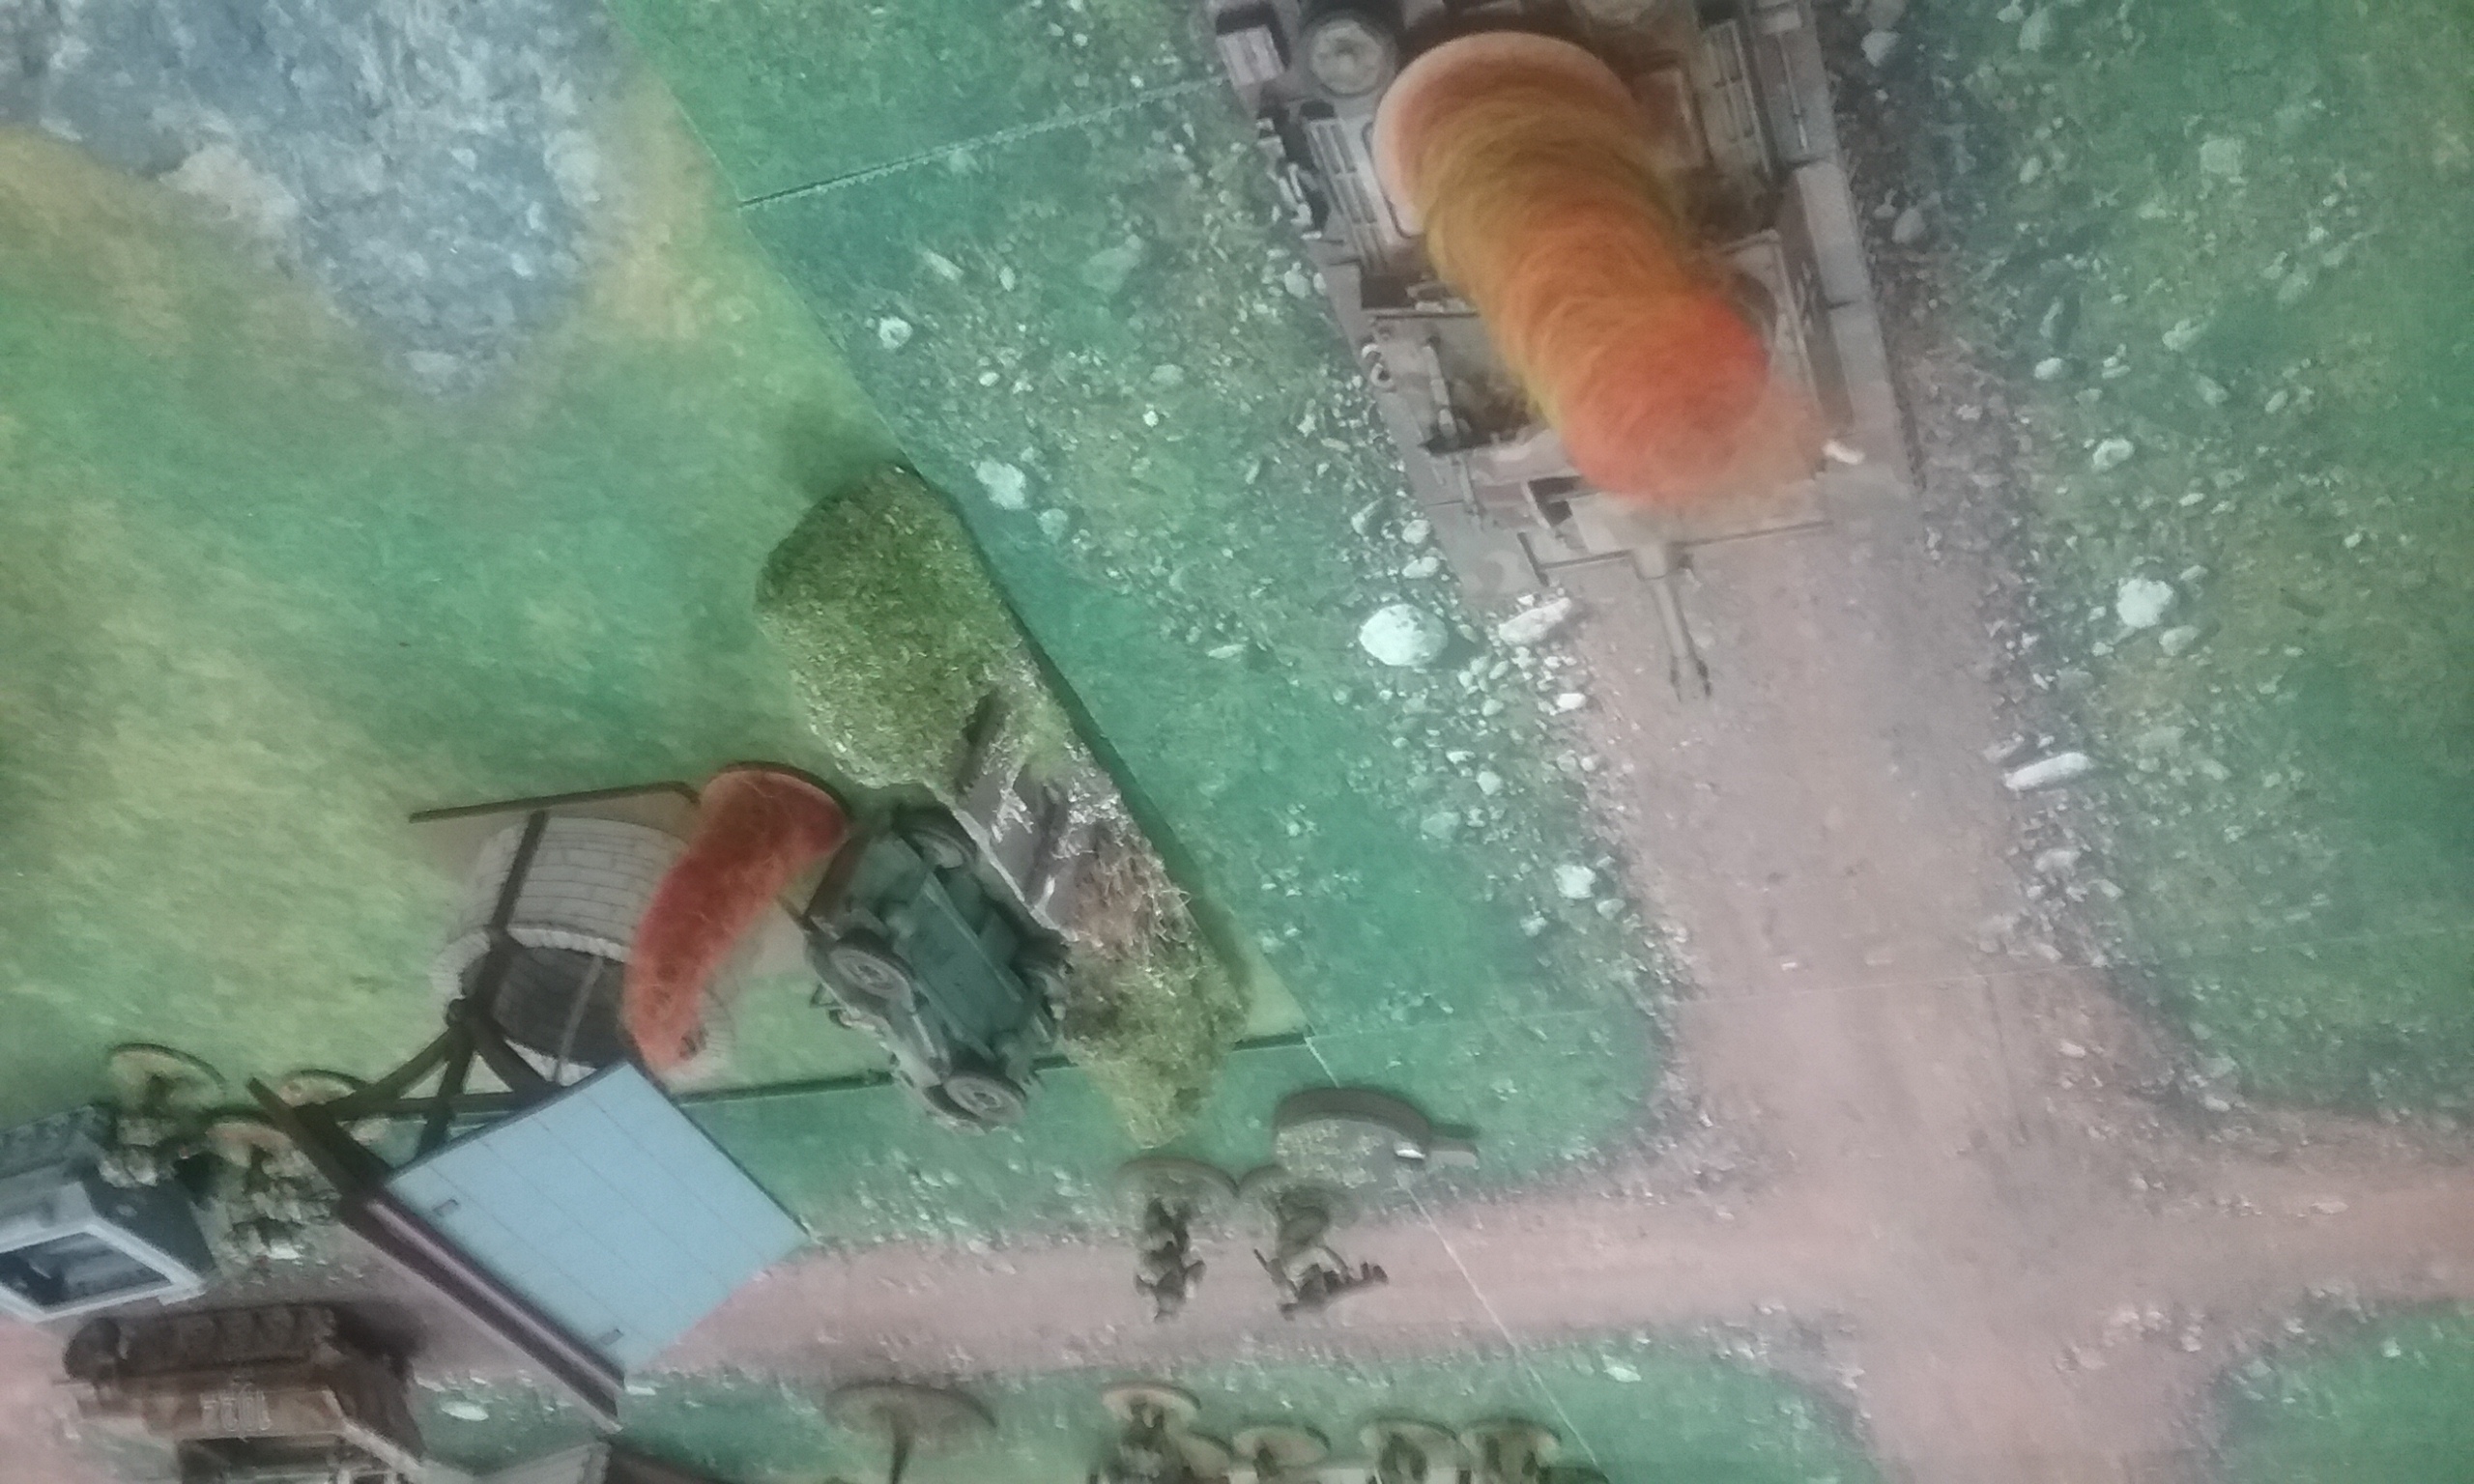 2nd SS Panzer versus 'murica in a fierce infantry engagement